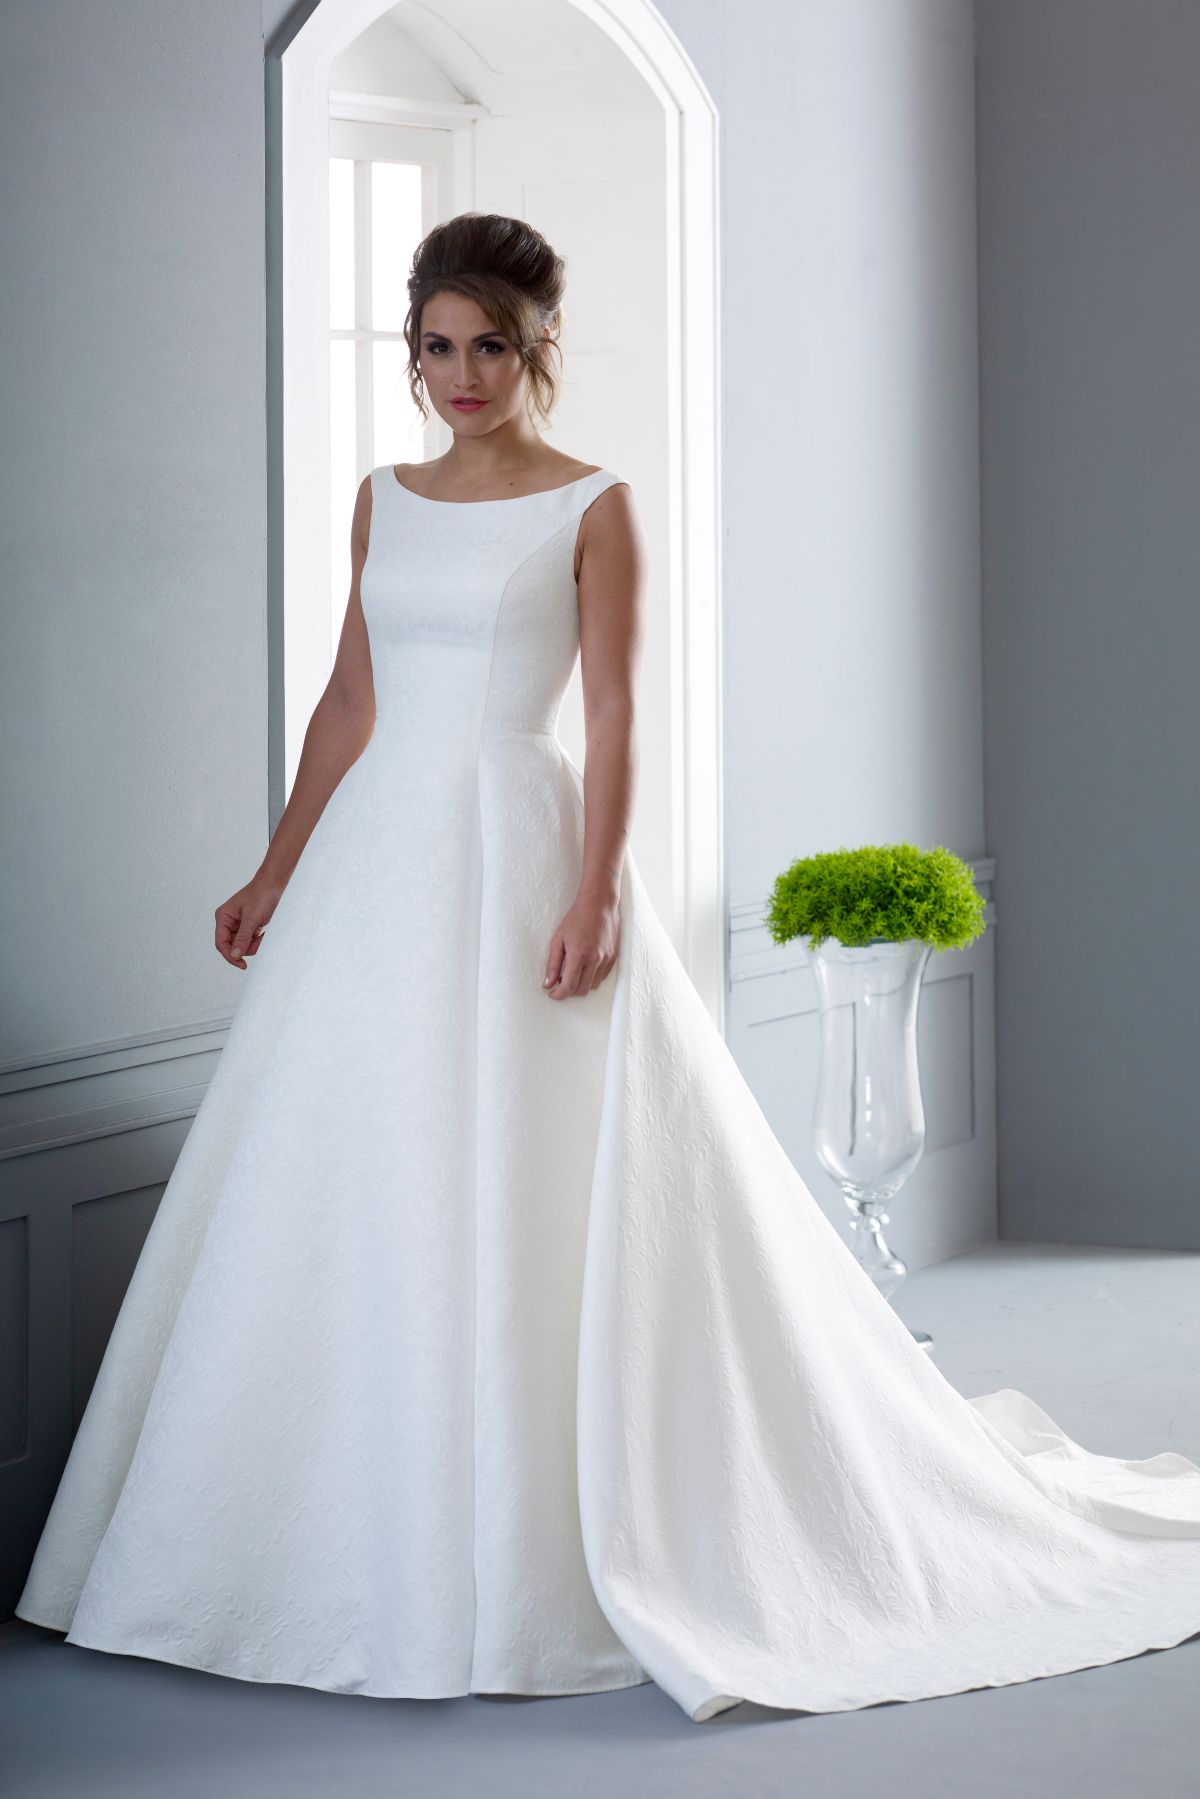 Best Dress 2 Impress Bridal-Image-103